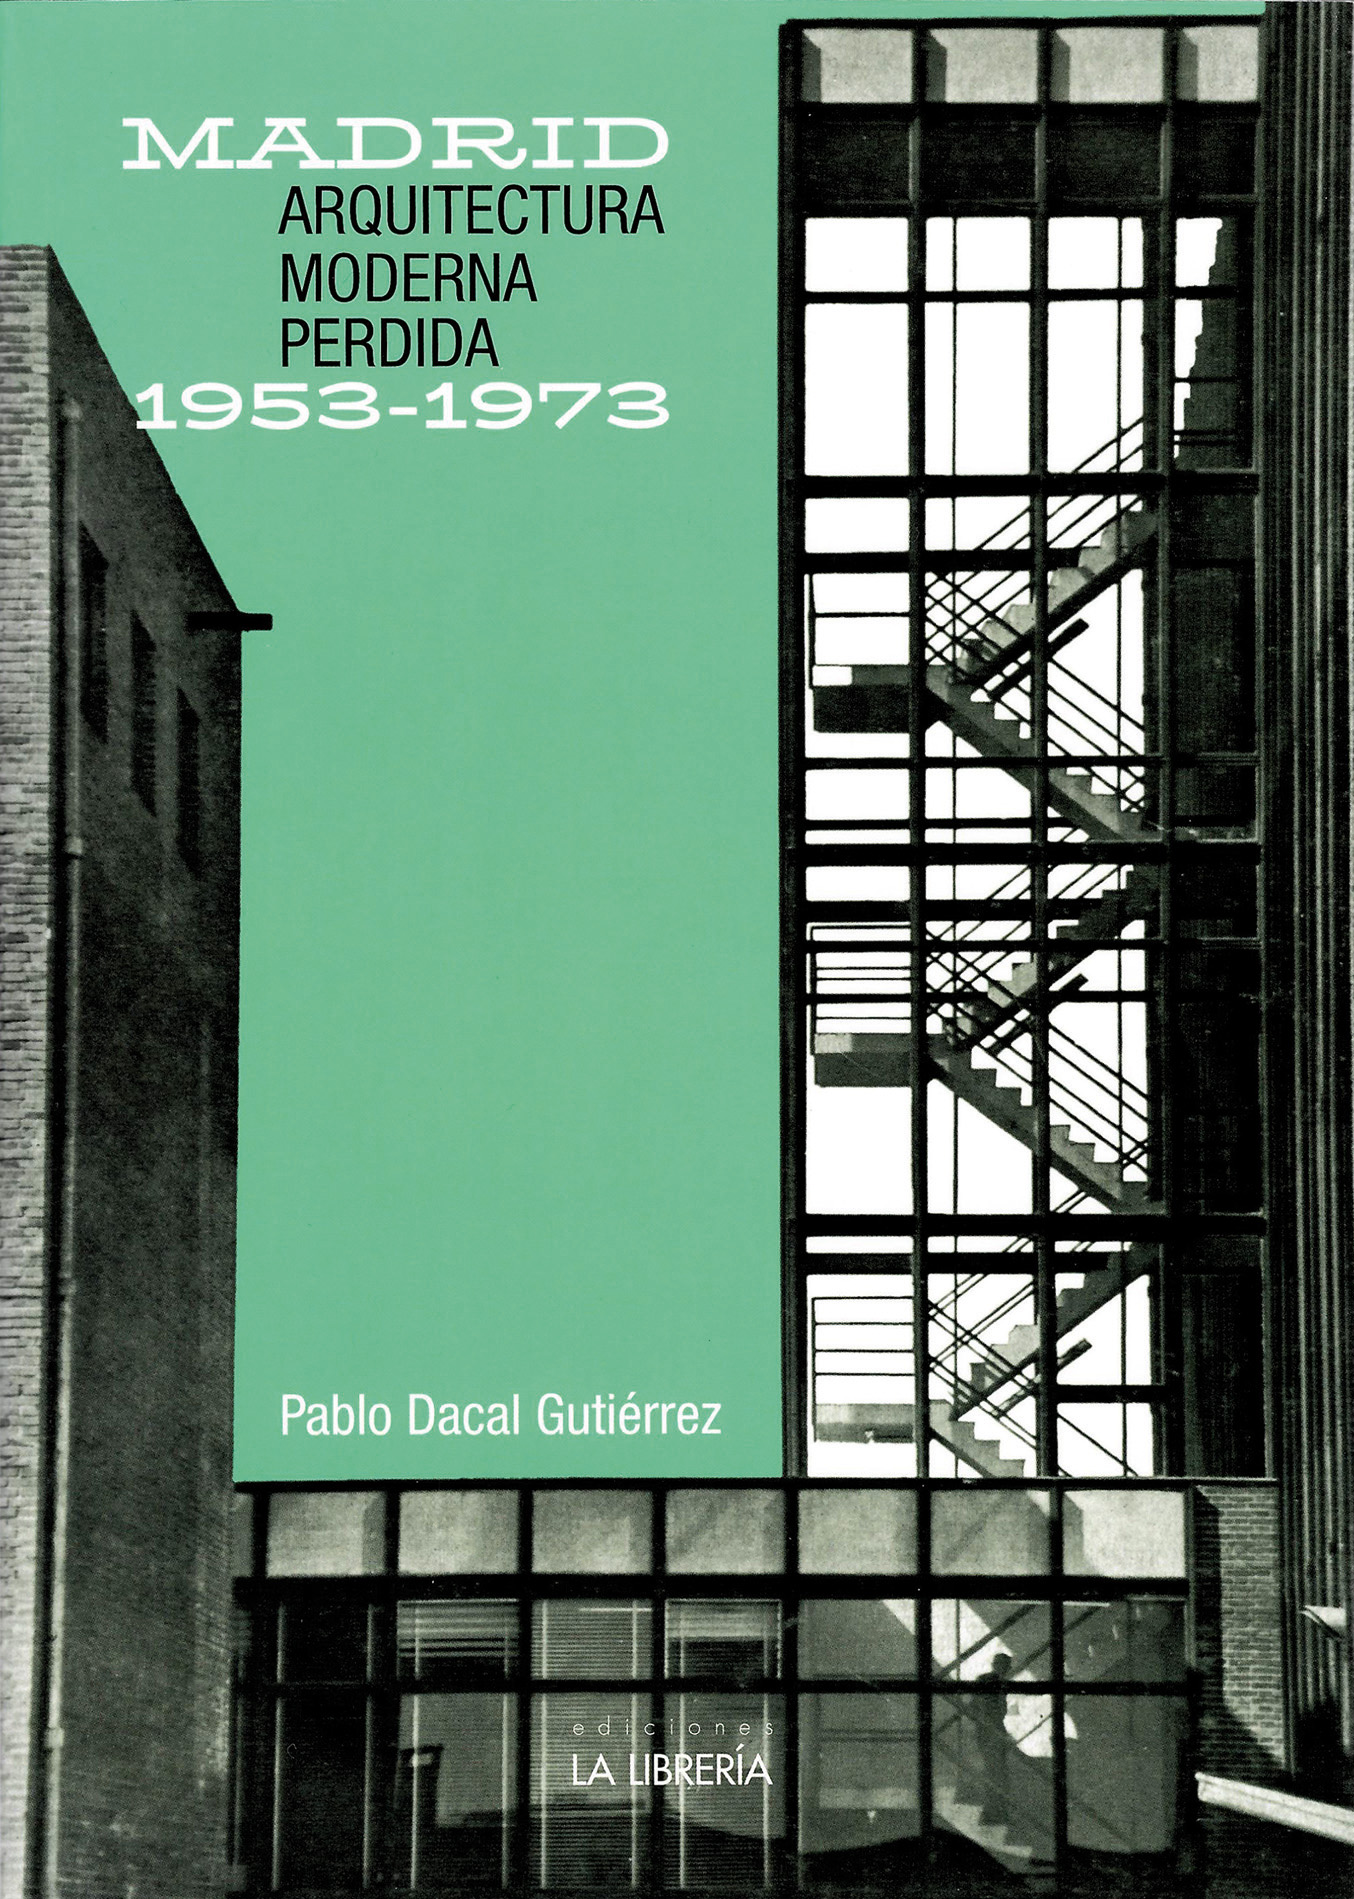 Madrid: Arquitectura moderna perdida 1953-1973